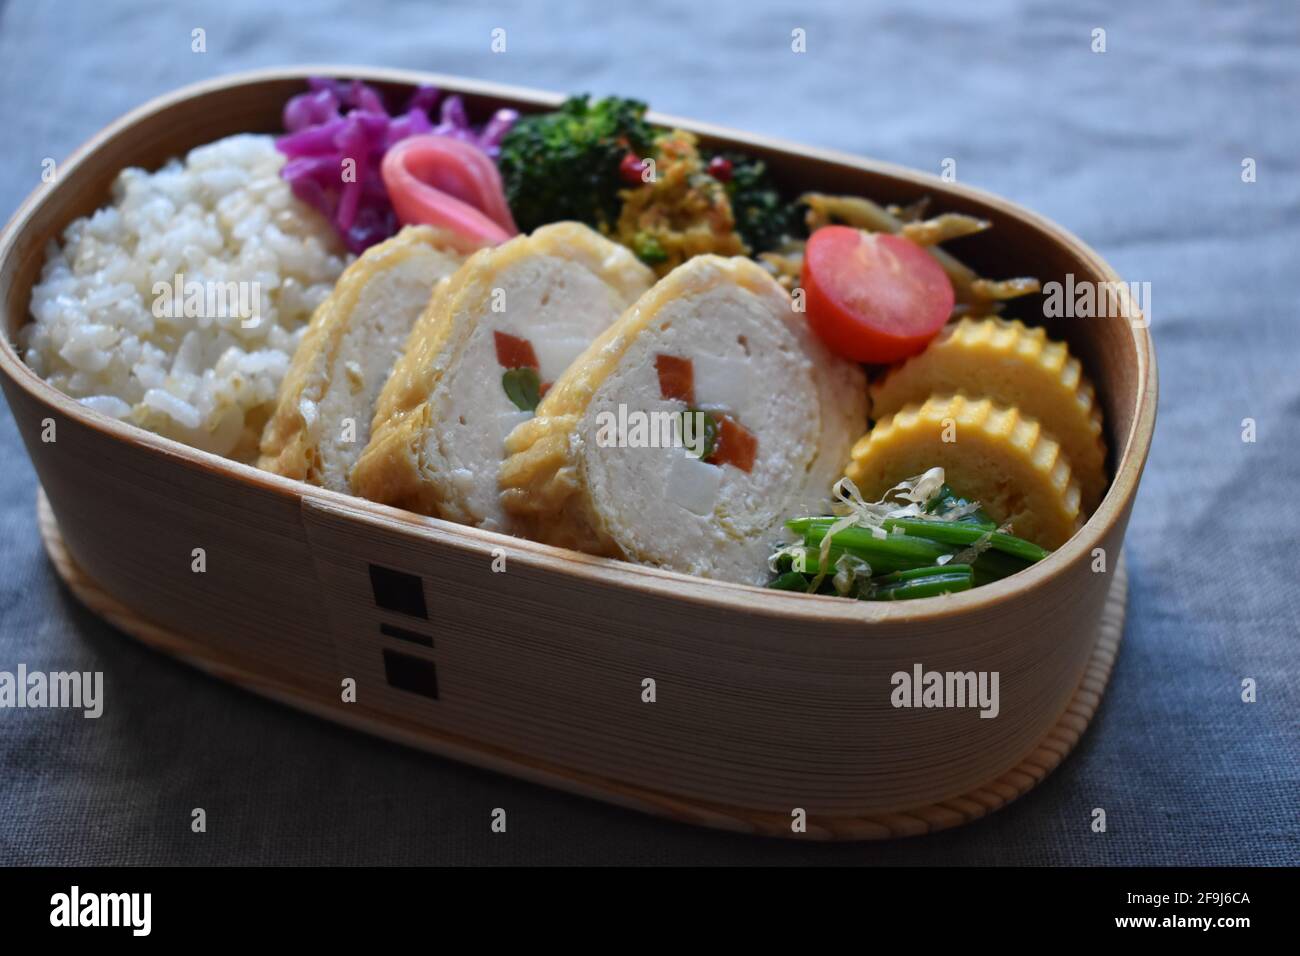 https://c8.alamy.com/comp/2F9J6CA/wappa-bento-japanese-lunch-box-made-with-round-shaped-wooden-plate-shinoda-maki-2F9J6CA.jpg